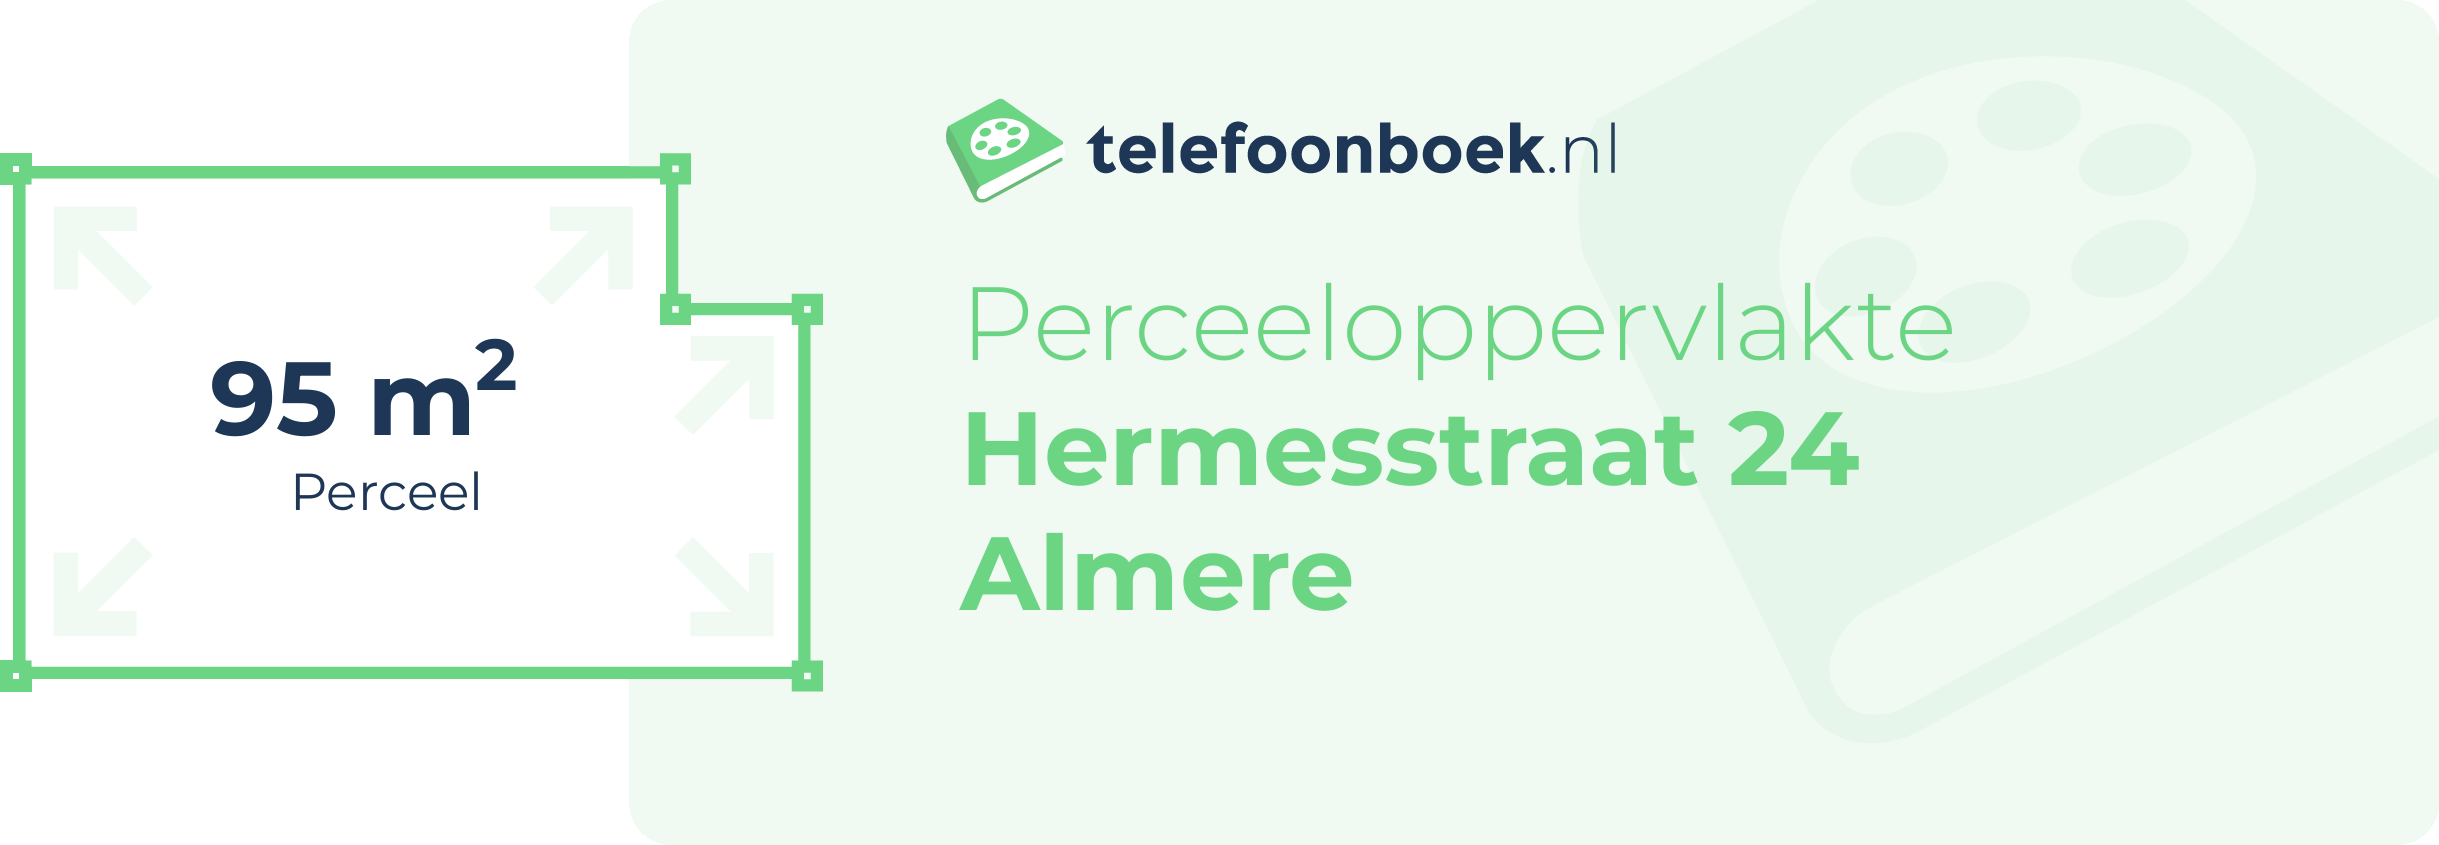 Perceeloppervlakte Hermesstraat 24 Almere